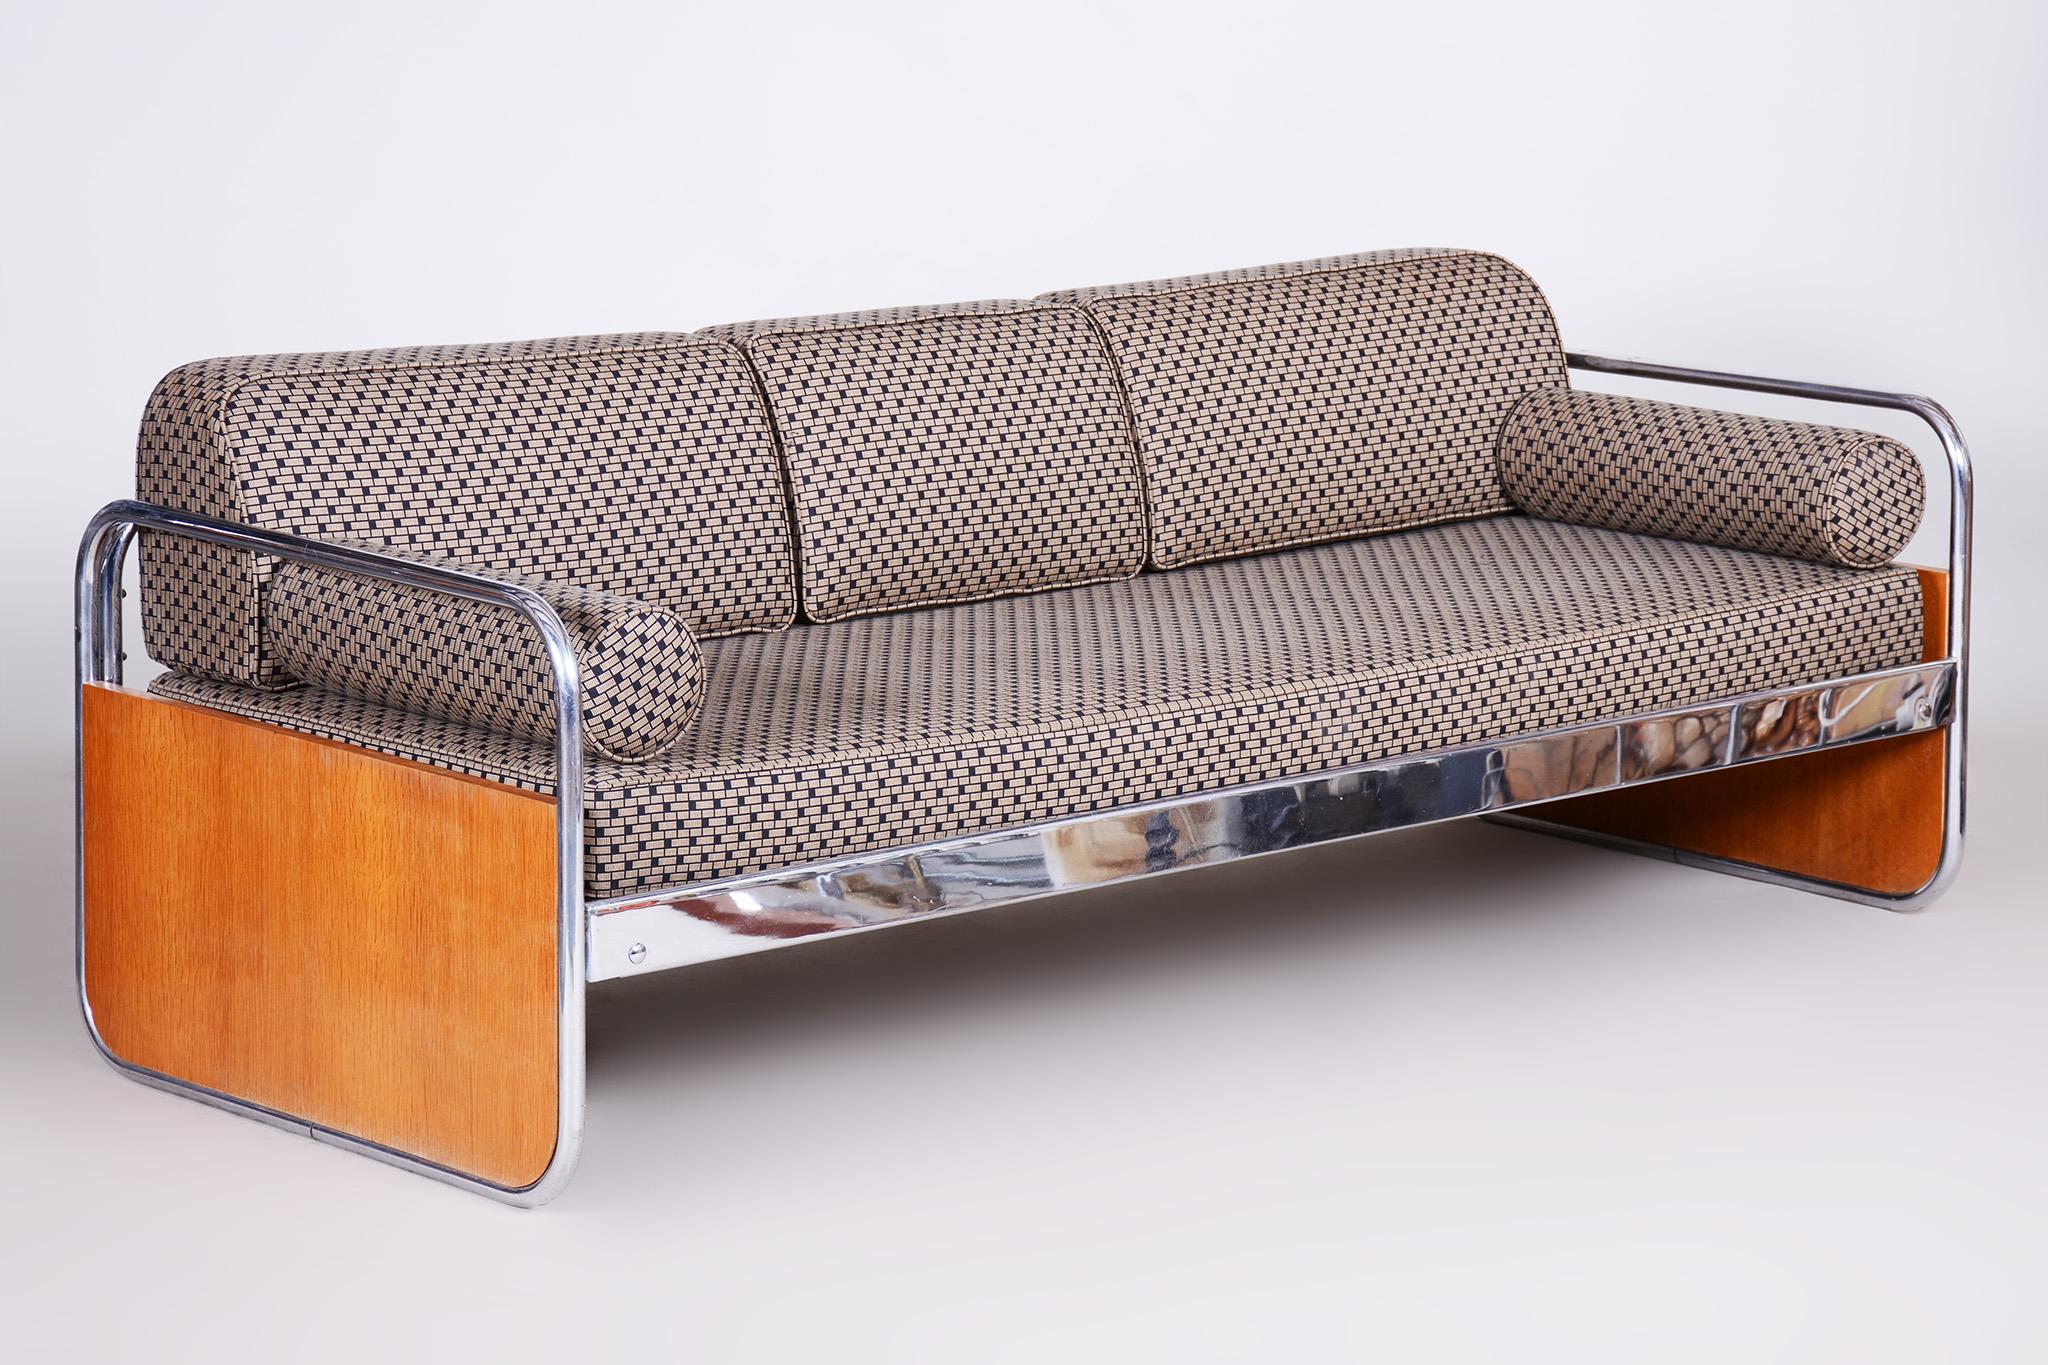 Fabric 1930s Bauhaus Sofa Made by Hynek Gottwald, Czechia, Restored and Reupholstered